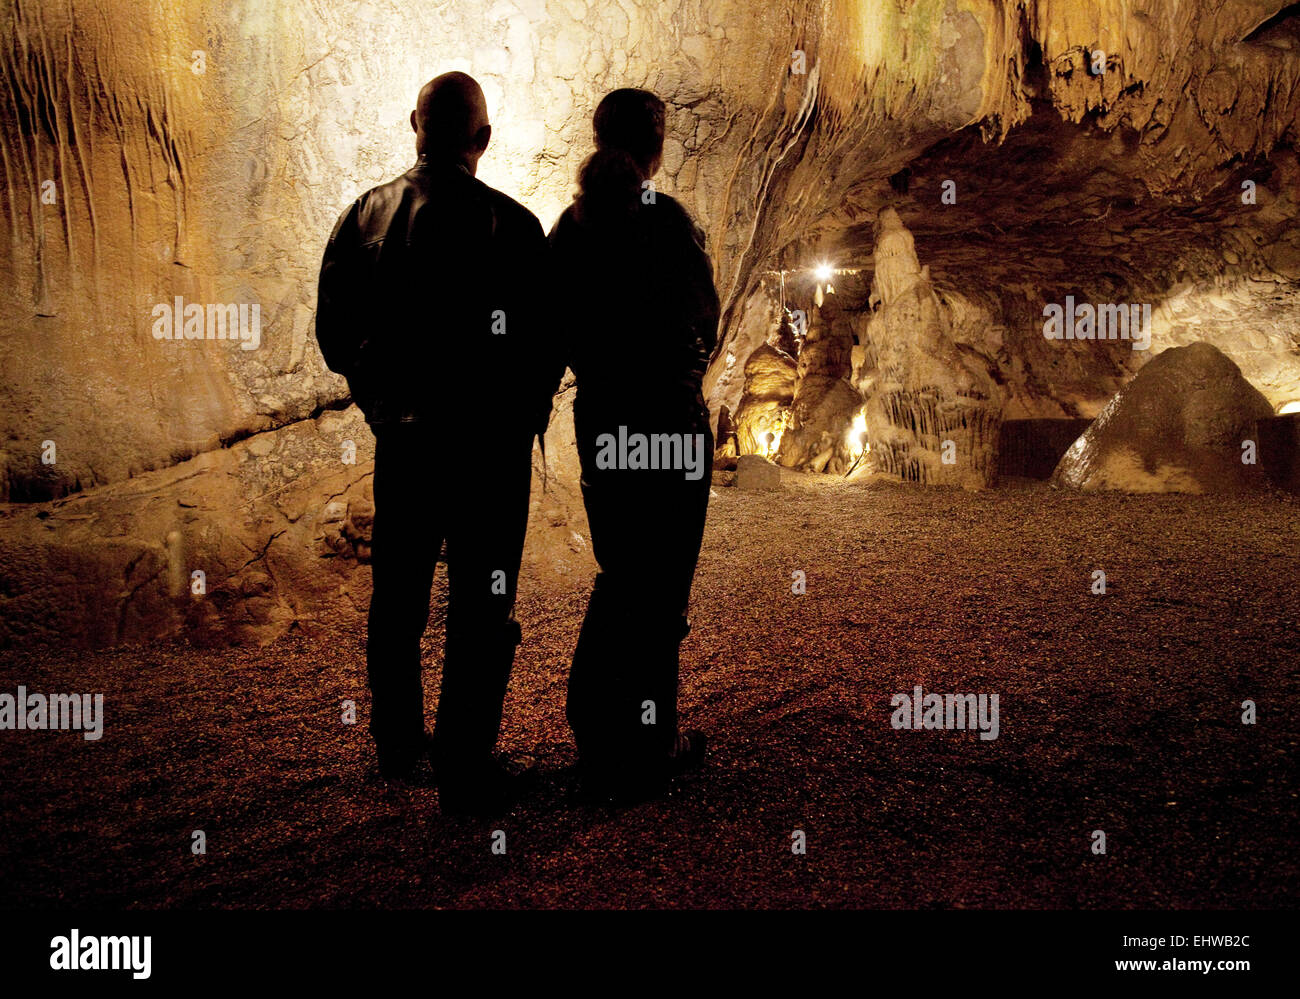 People in the Dechen Cave in Iserlohn. Stock Photo